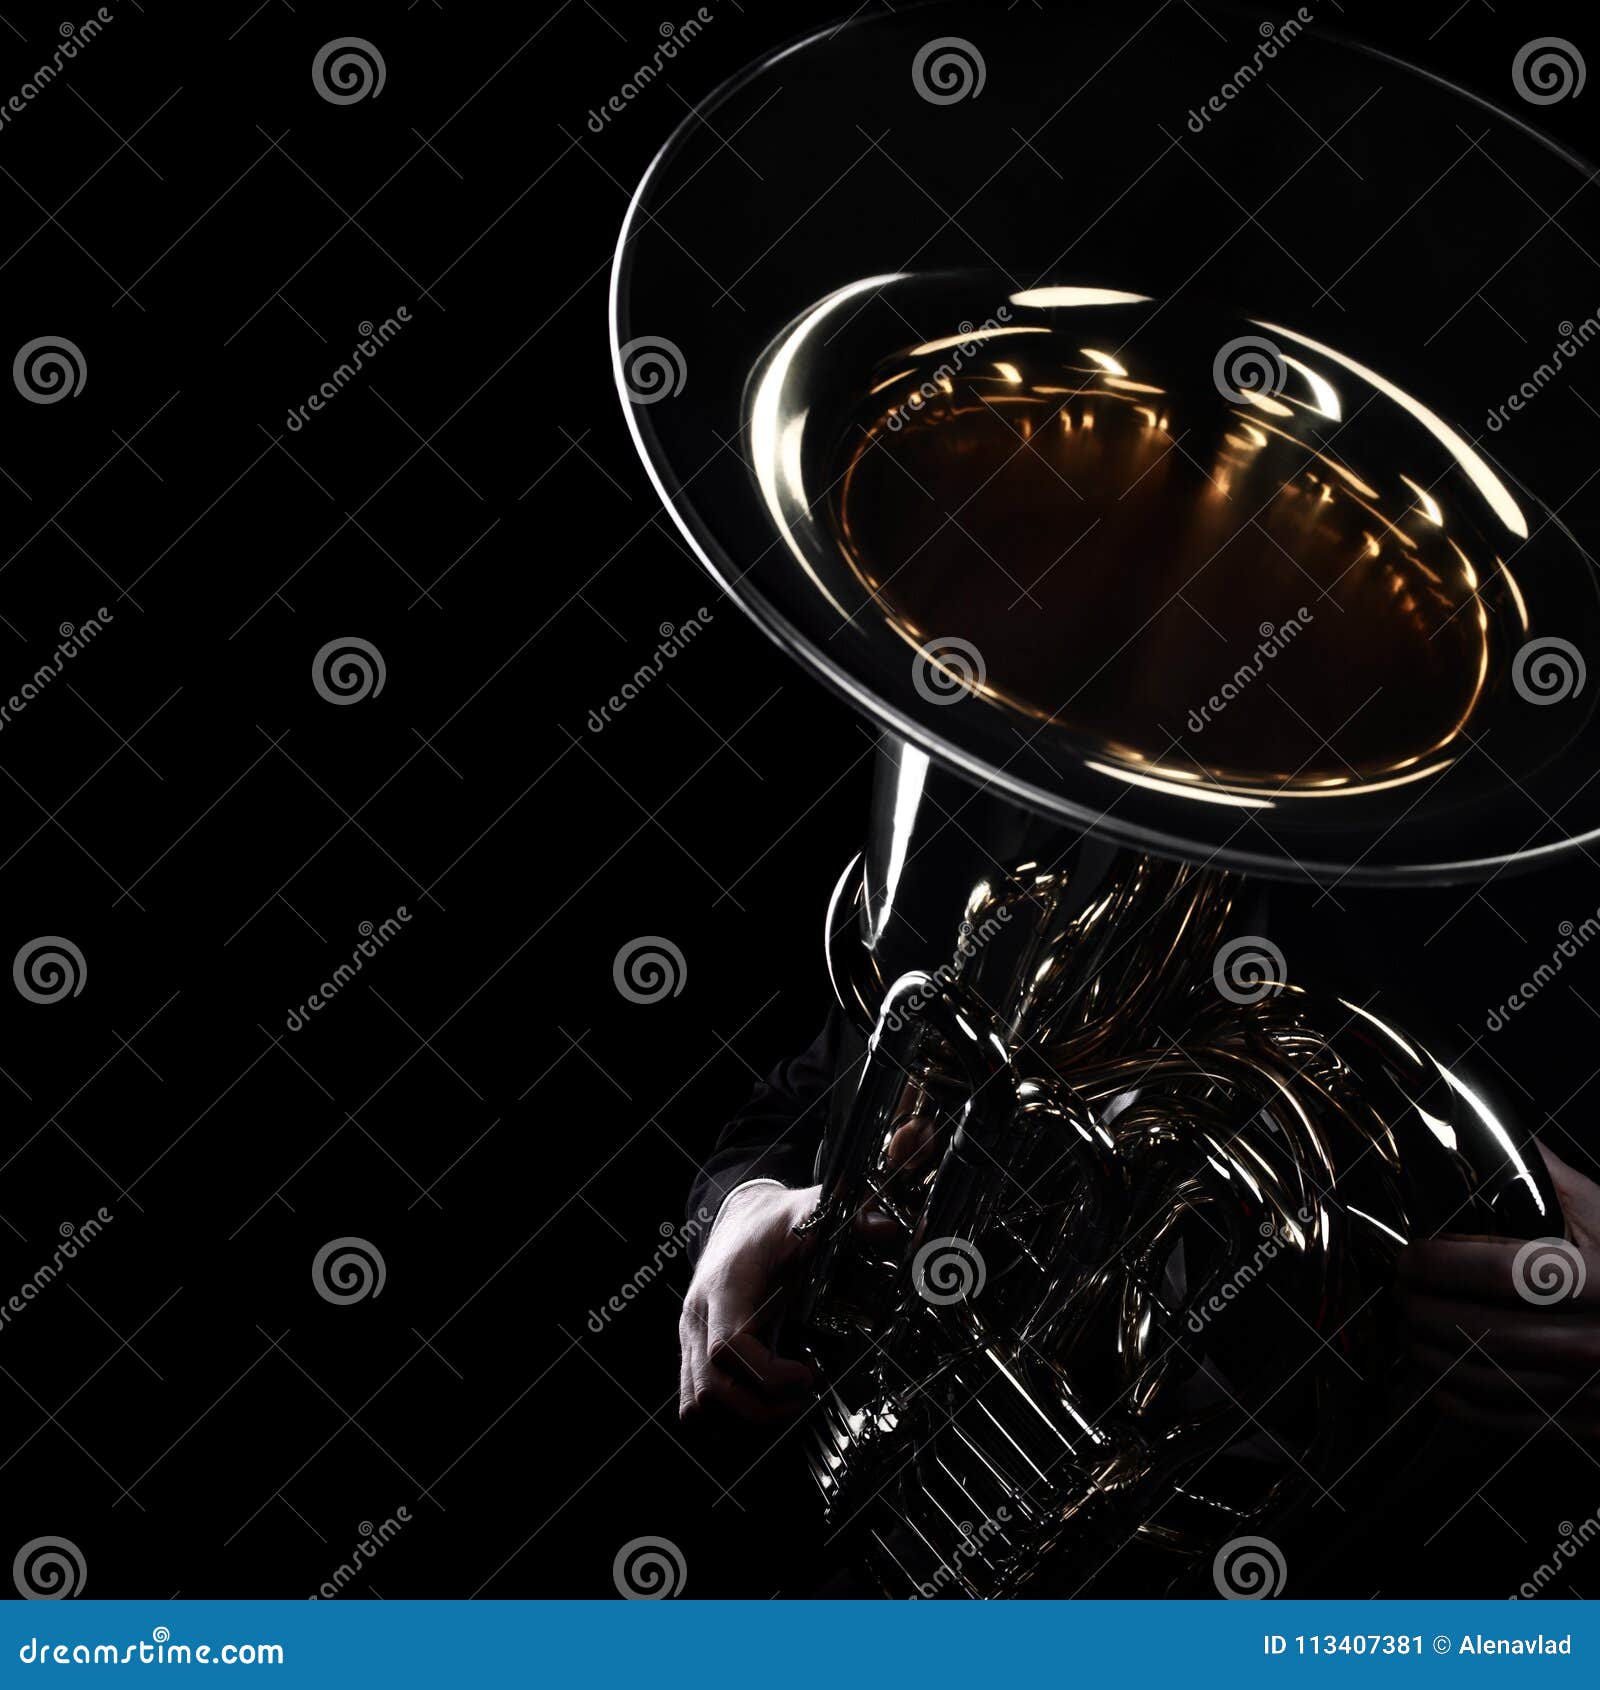 tuba player brass instruments